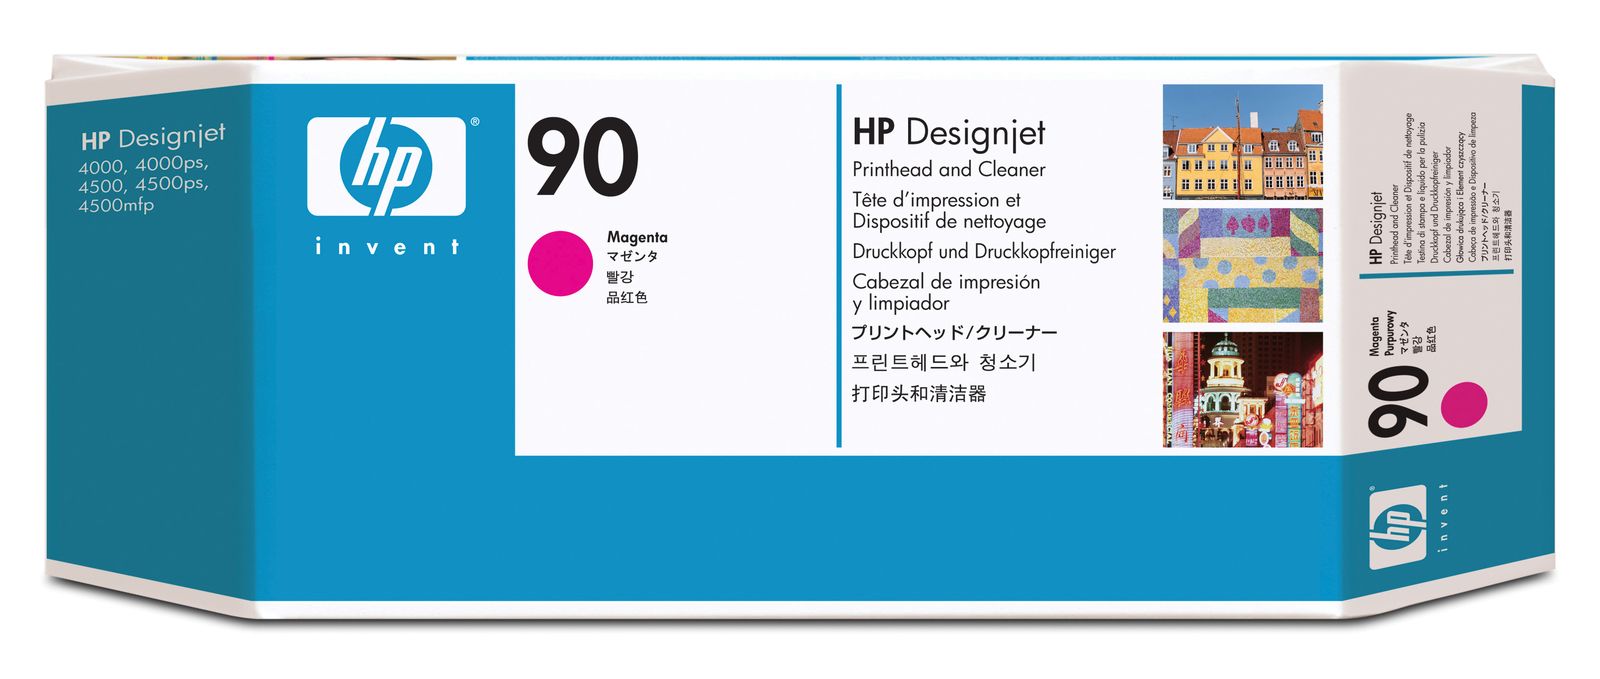 HP 90 Magenta DesignJet Printhead / Printhead Cleaner C5056A

